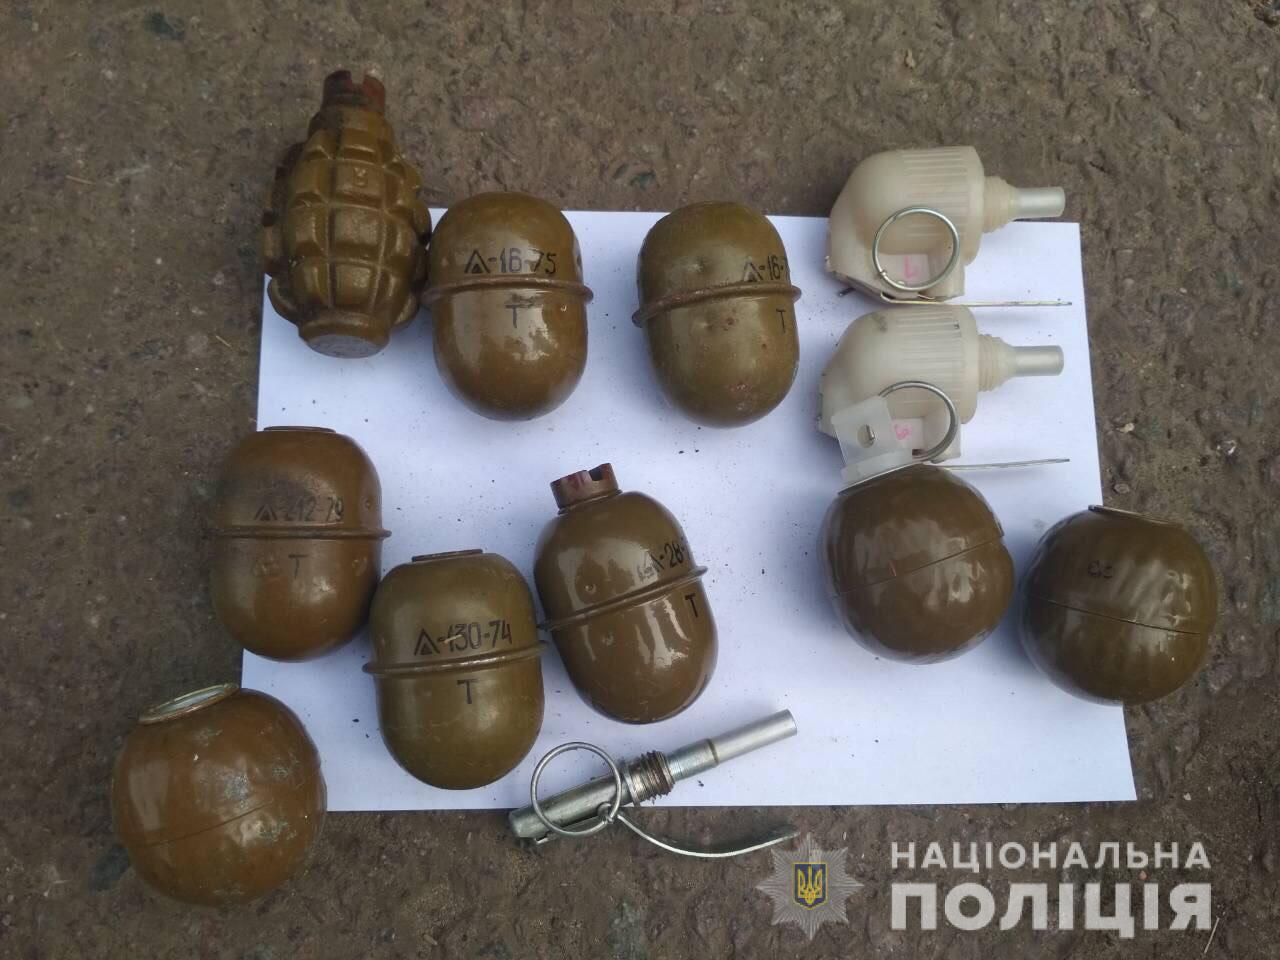 Новости Днепра про 8 гранатометов и арсенал оружия: опасная находка полиции